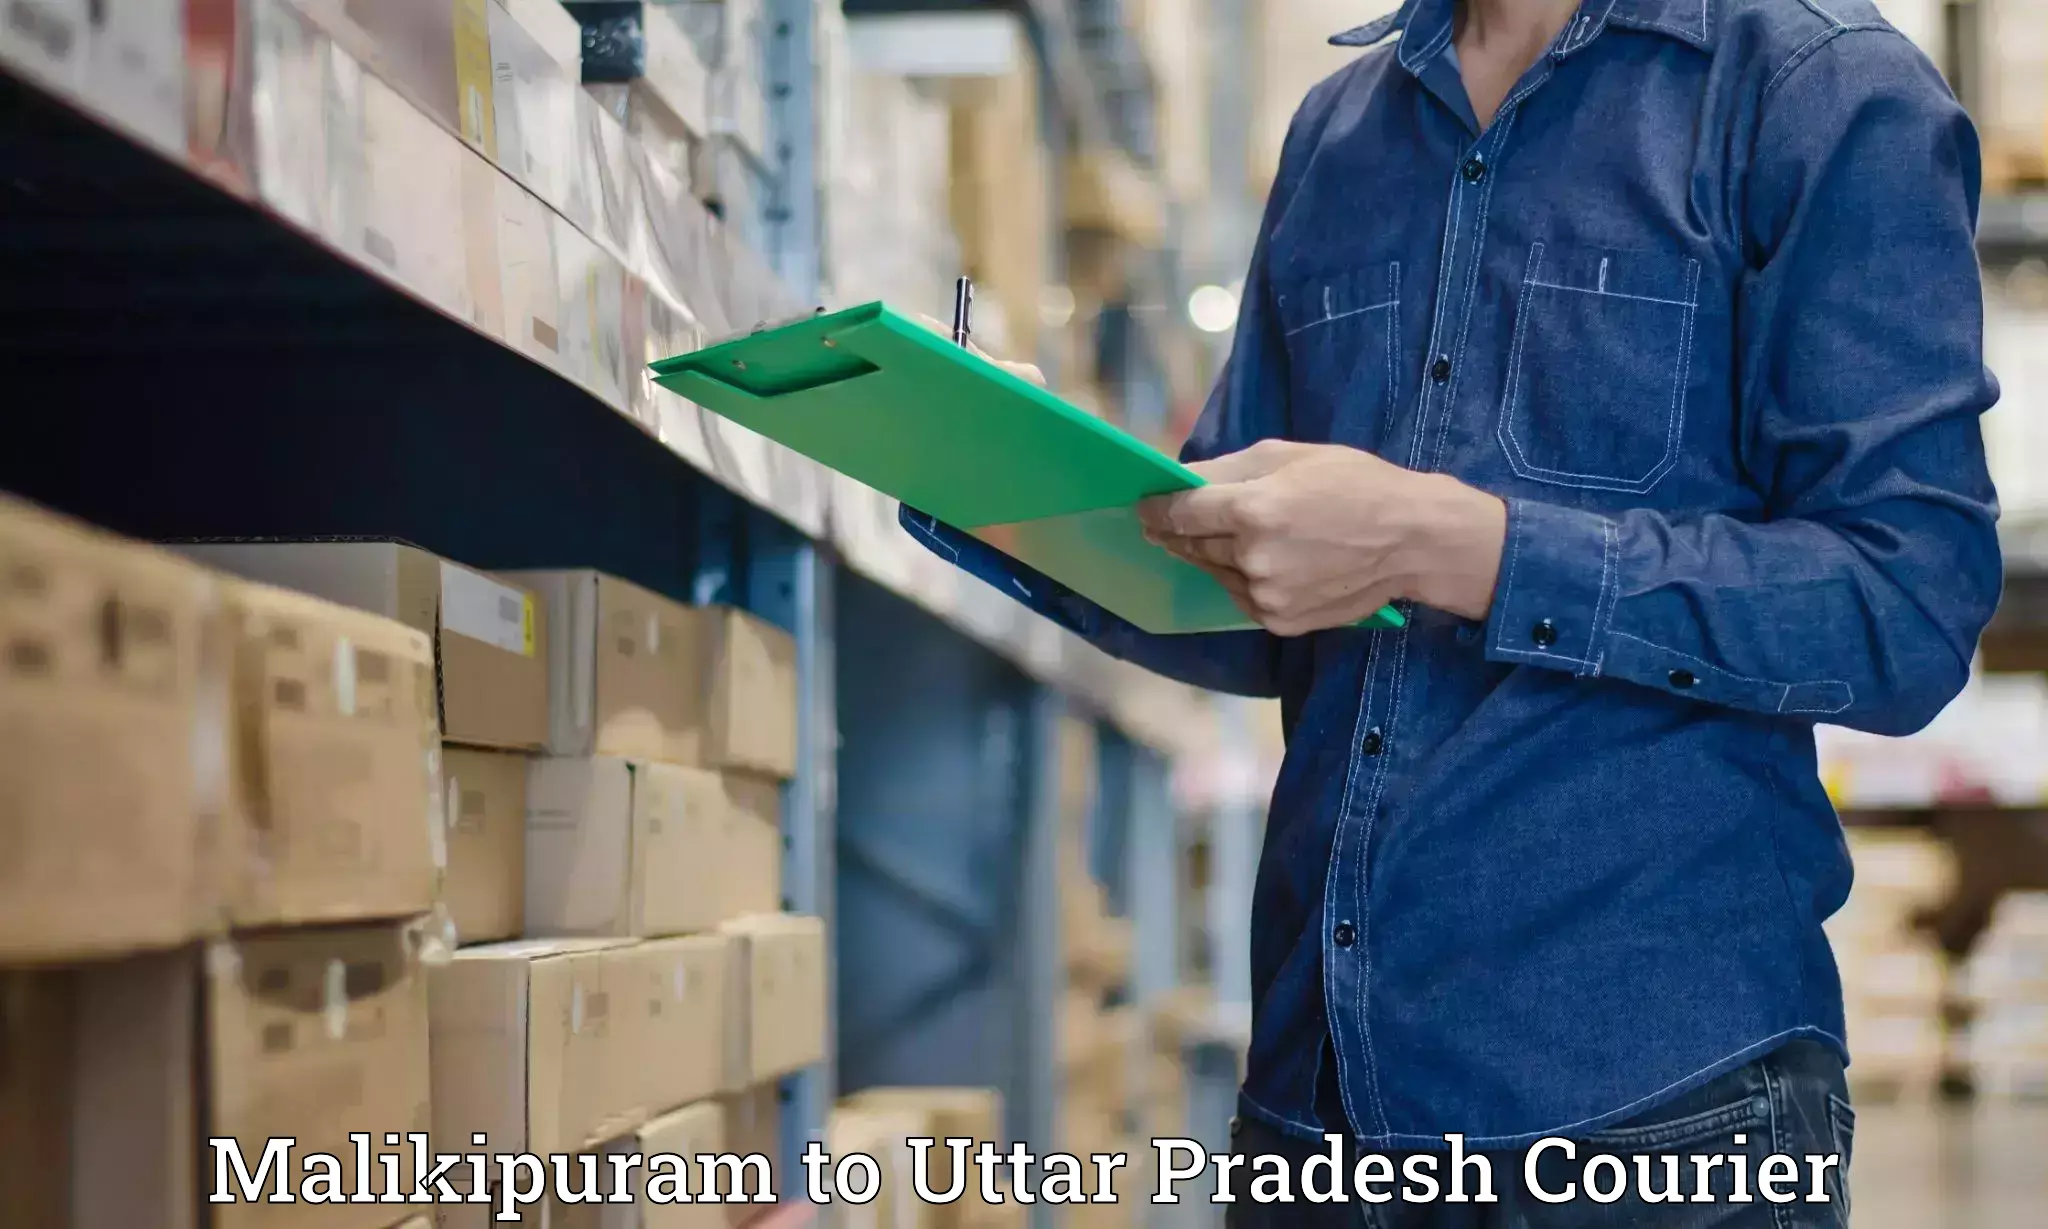 Customer-focused courier Malikipuram to Sarai Meer